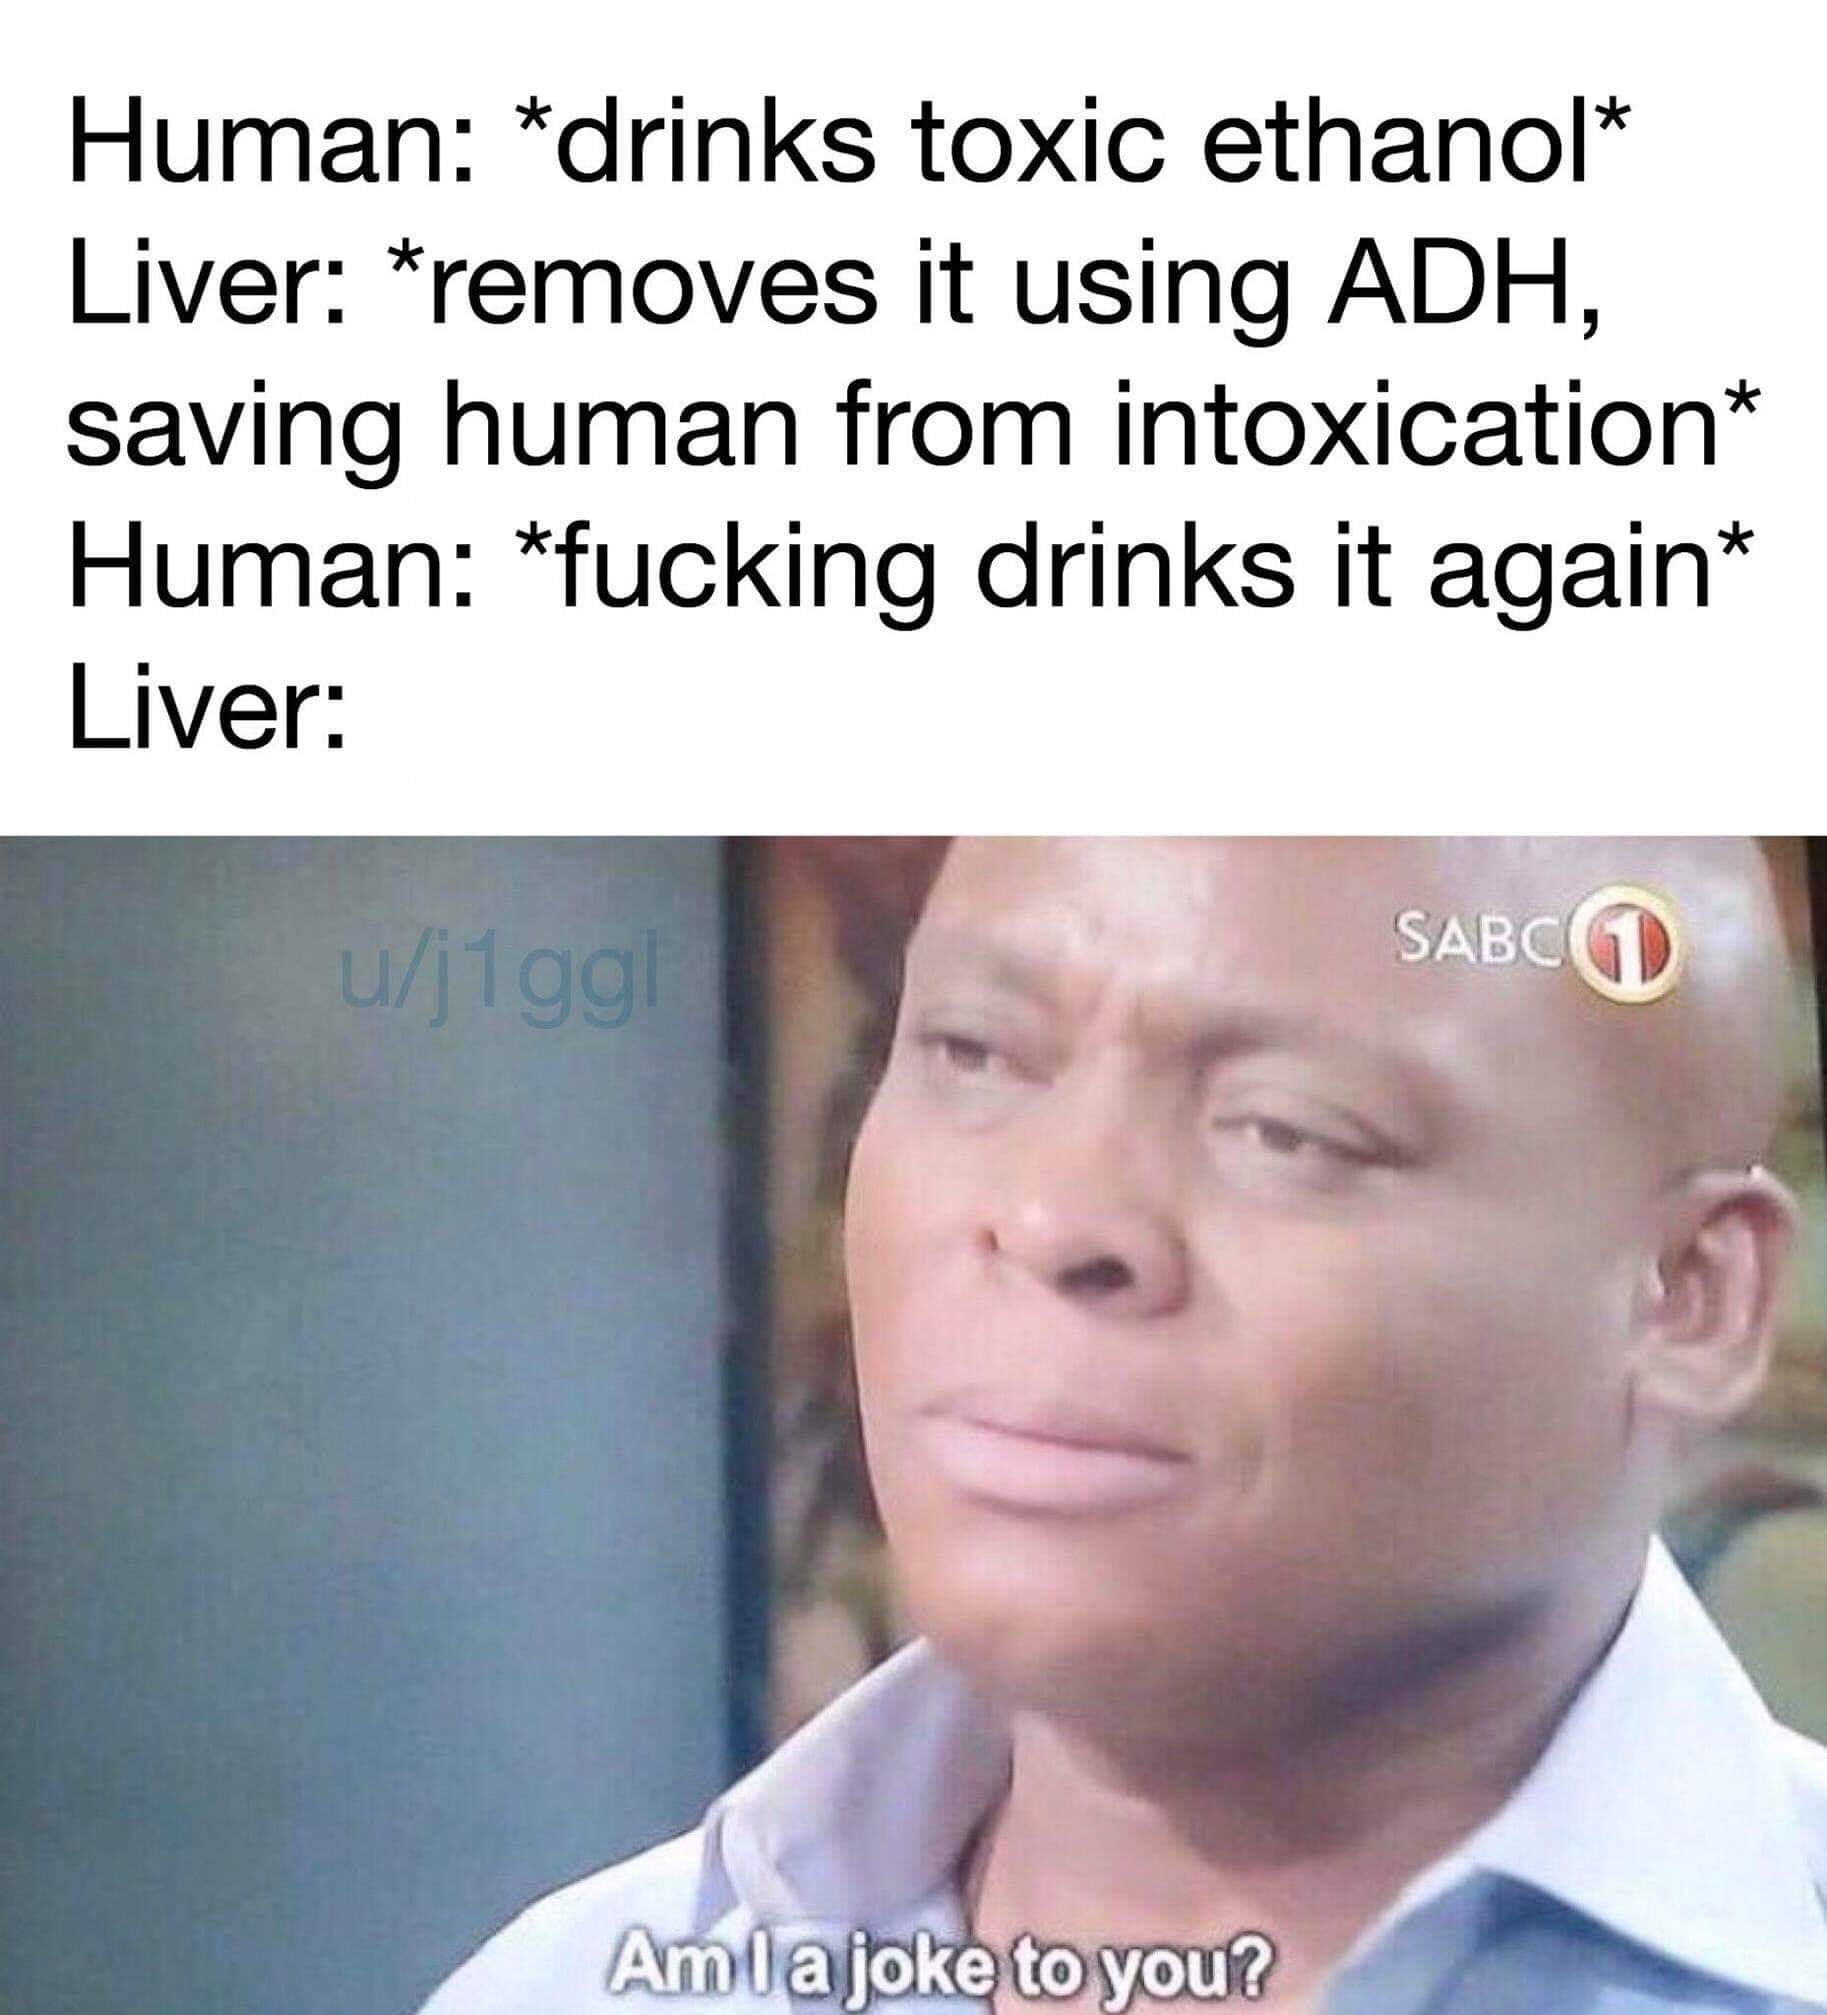 am i fucking joke to you meme - Human drinks toxic ethanol Liver removes it using Adh, saving human from intoxication Human fucking drinks it again Liver uj1ggl Sabc Amla joke to you?